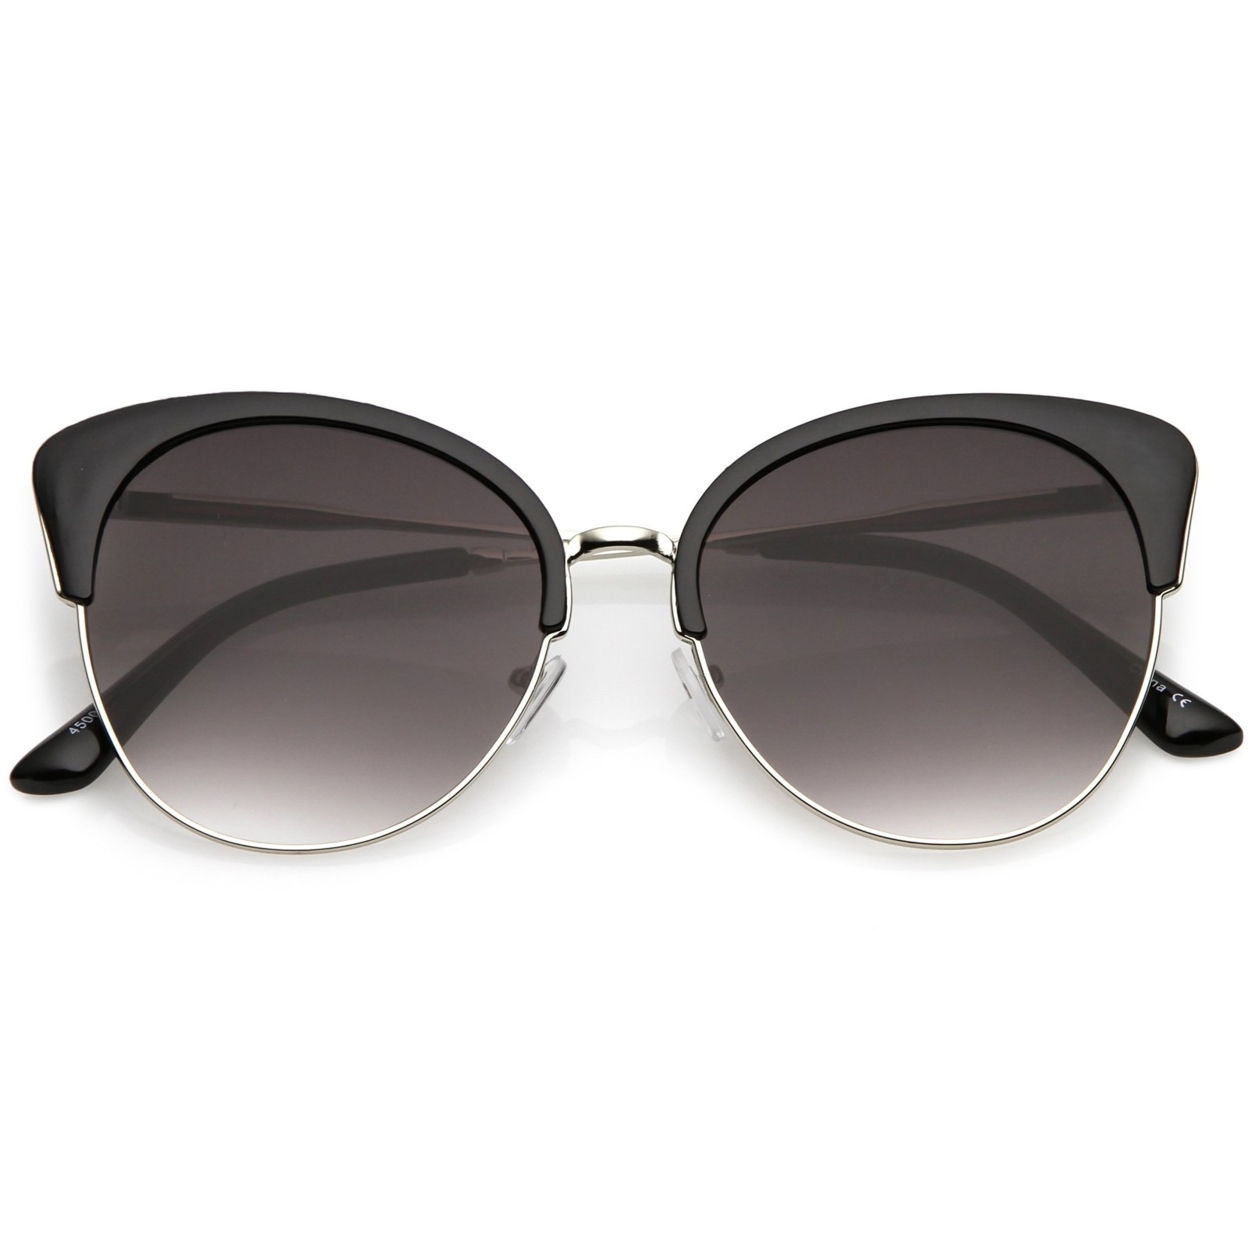 Oversize Half Frame Cat Eye Sunglasses With Round Neutral Color Flat Lens 58mm - Black Silver / Lavender